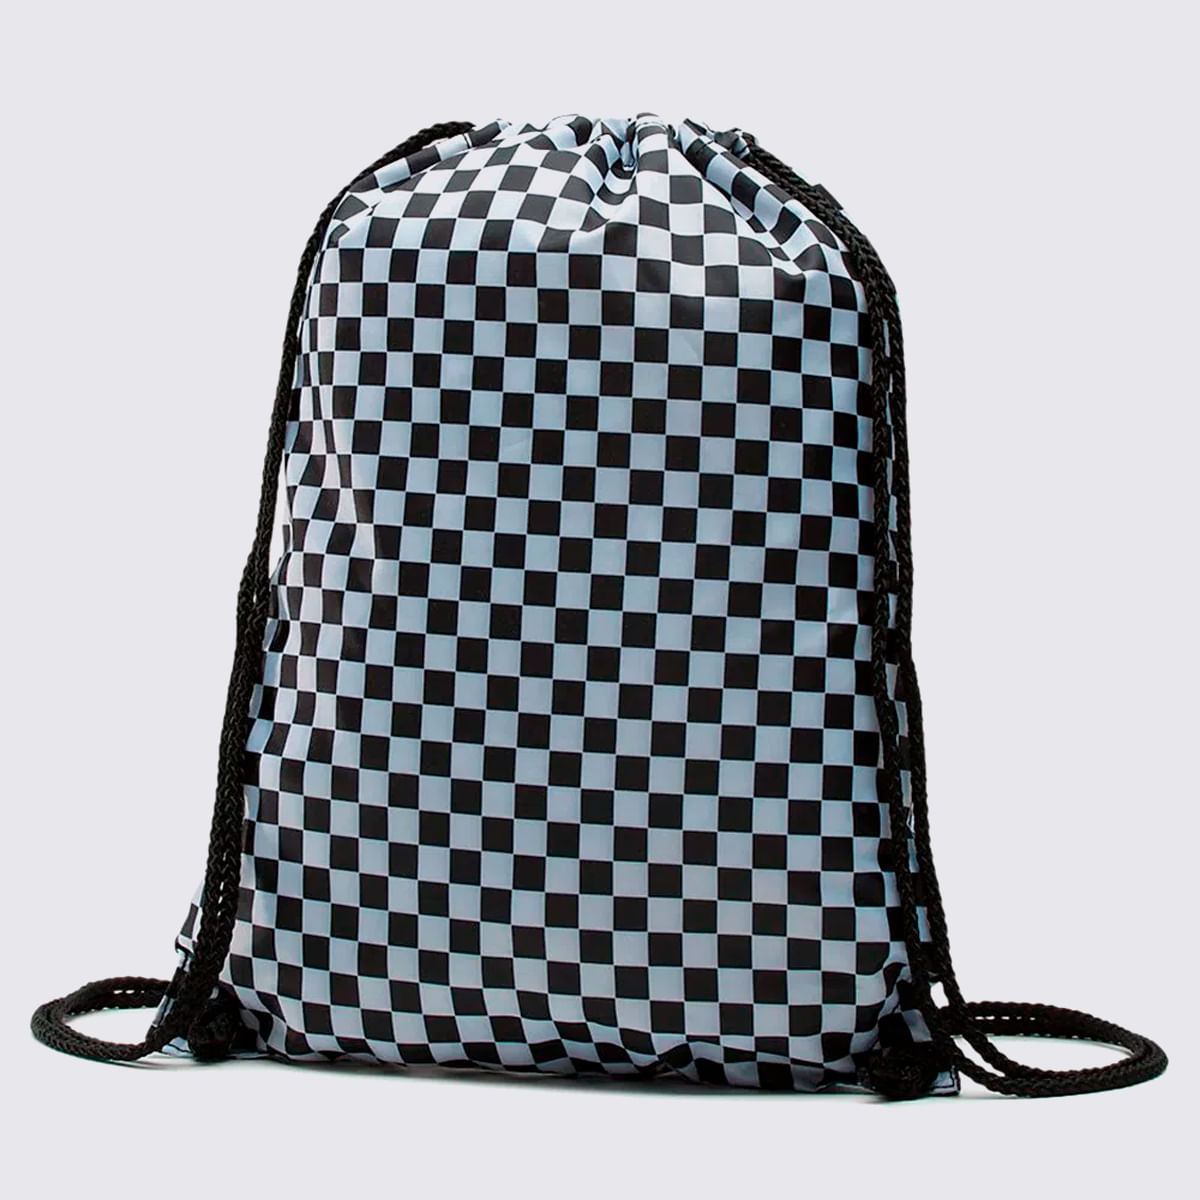 Wm Checkerboard Mochila Vans Black Menina VN000SUF56M Benched Bag - White Shoes